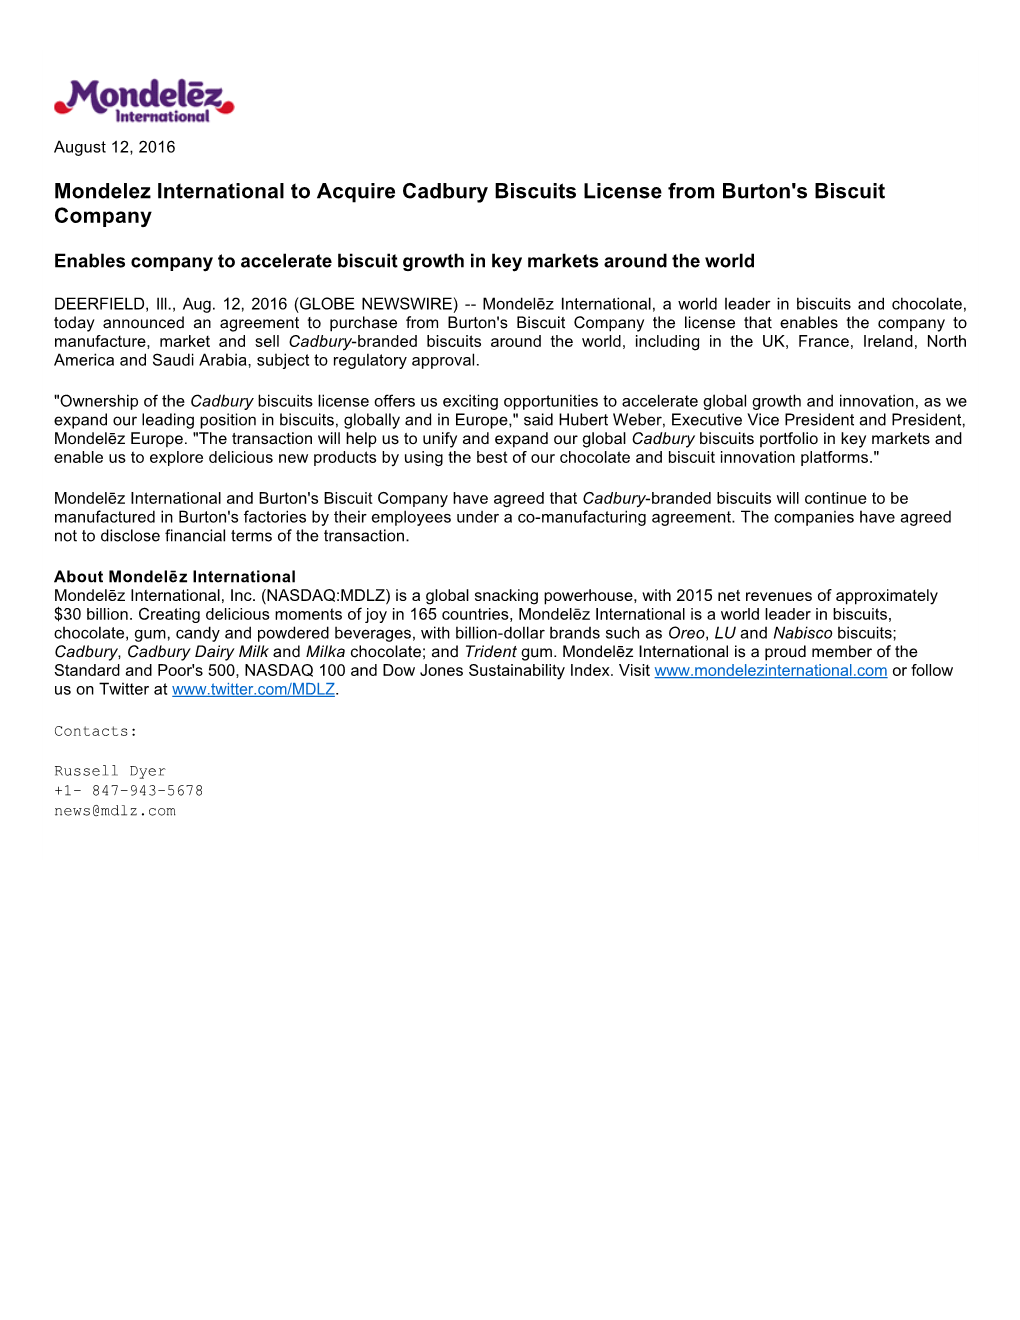 Mondelez International to Acquire Cadbury Biscuits License from Burton's Biscuit Company